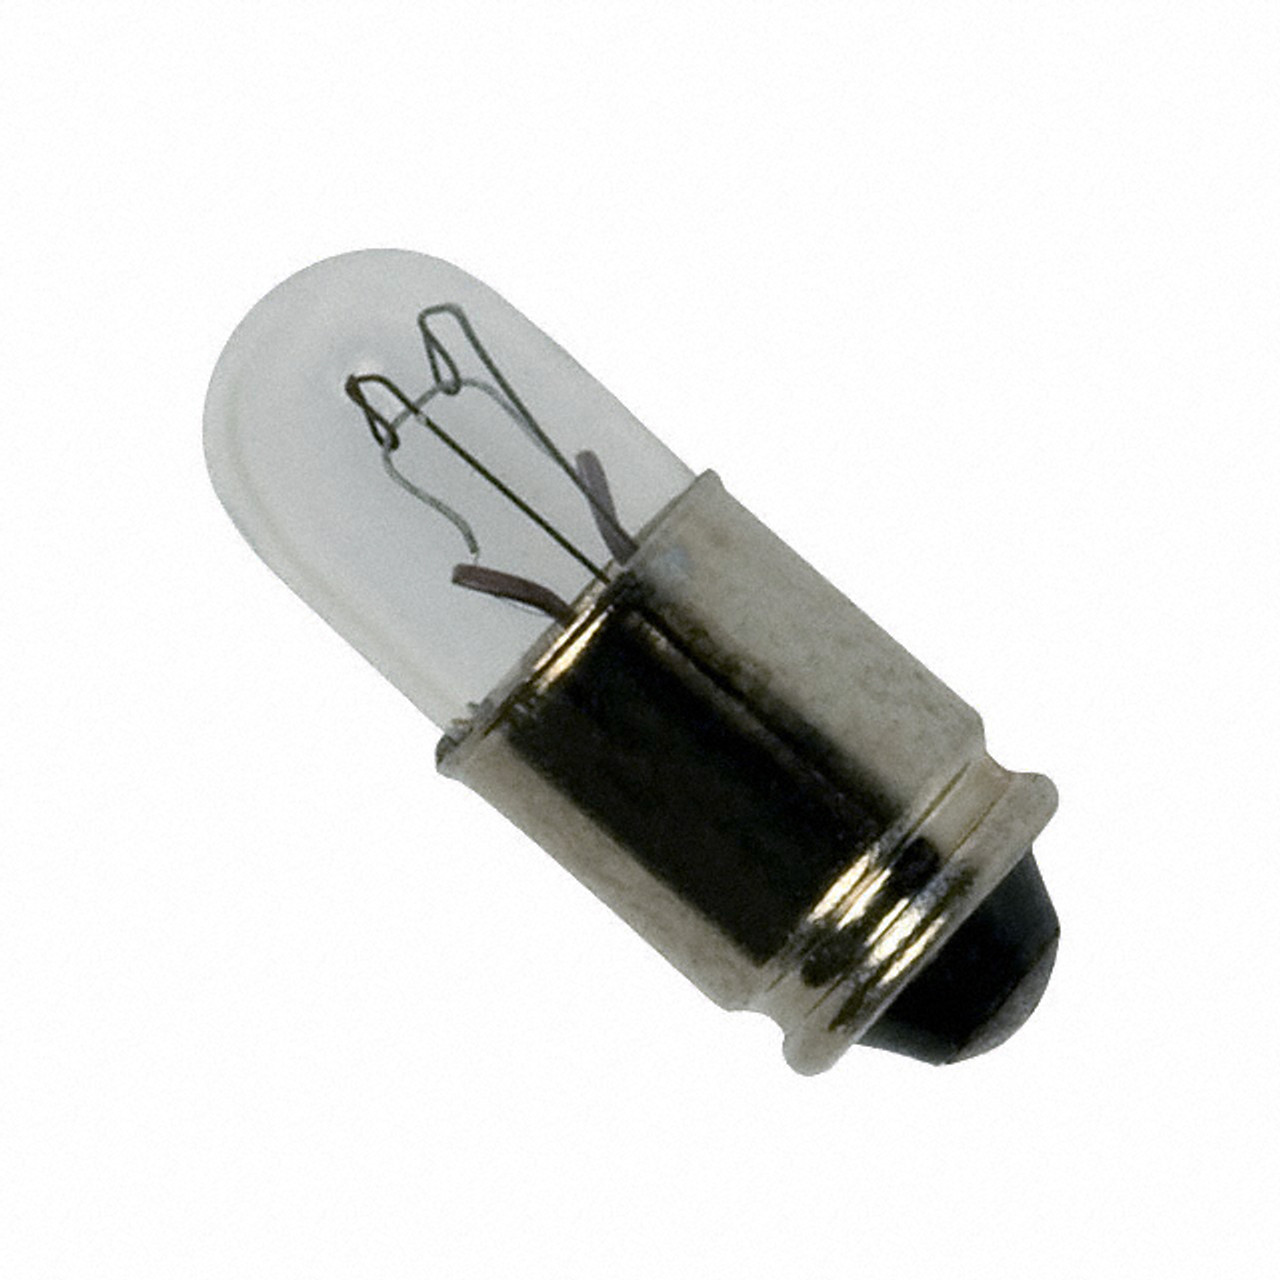 VCC 386 Incandescent Lamps